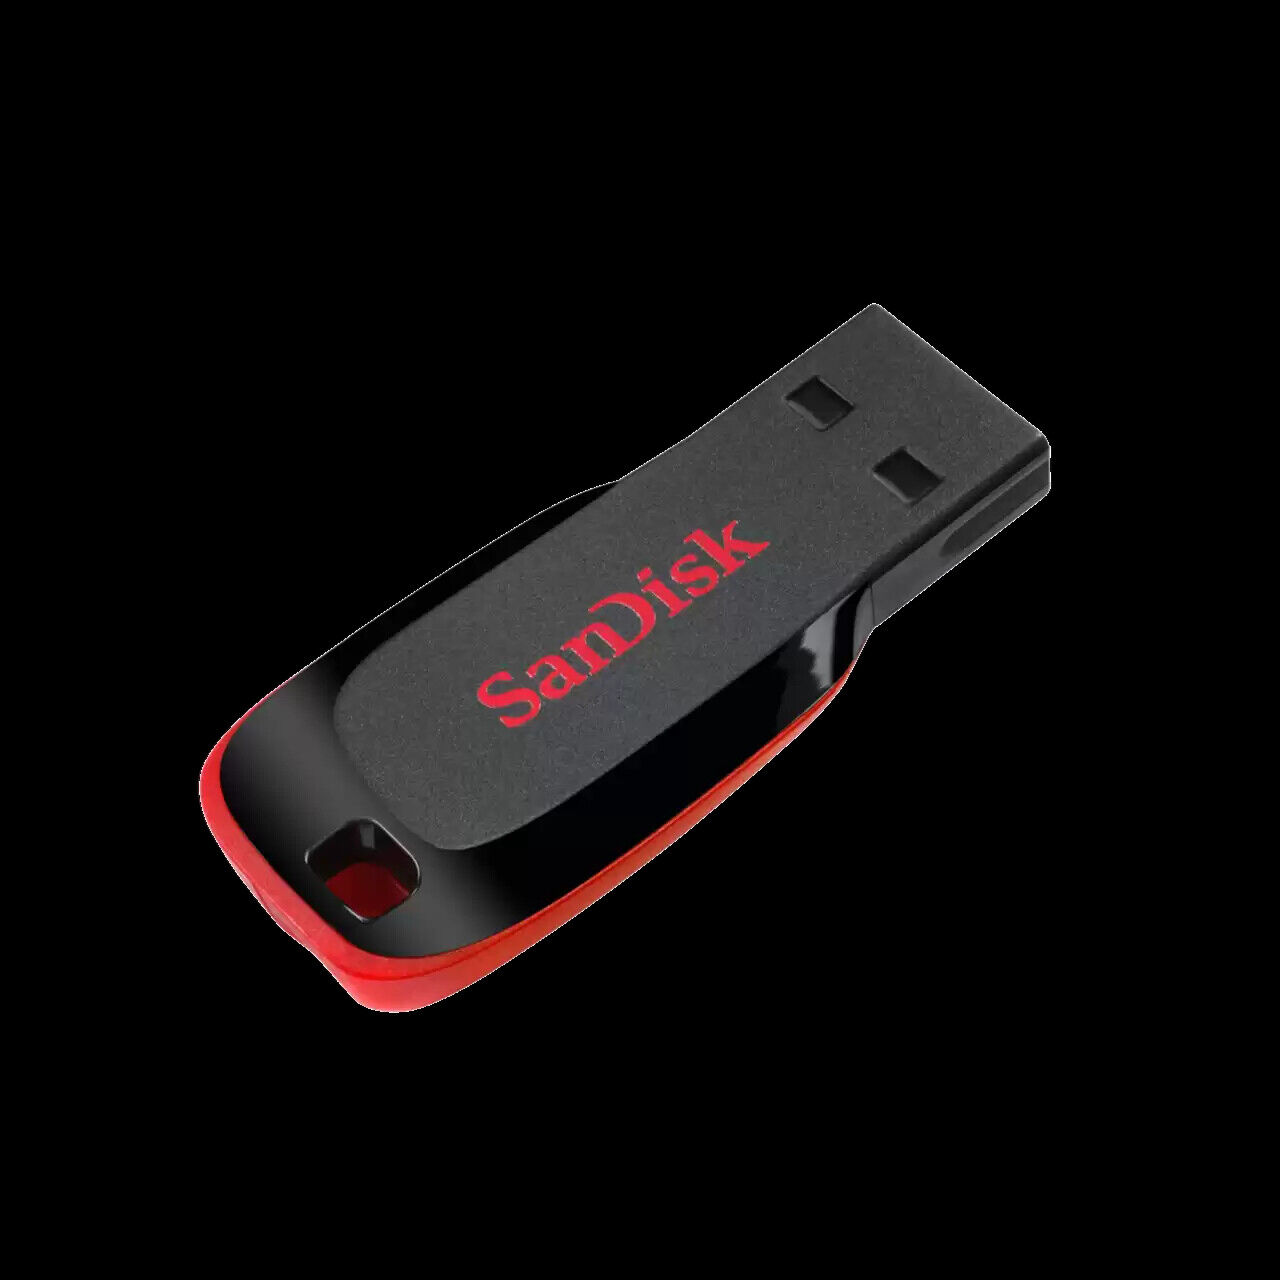 SanDisk 32GB Cruzer Blade USB Flash Drive, Black, Red - SDCZ50-032G-B35